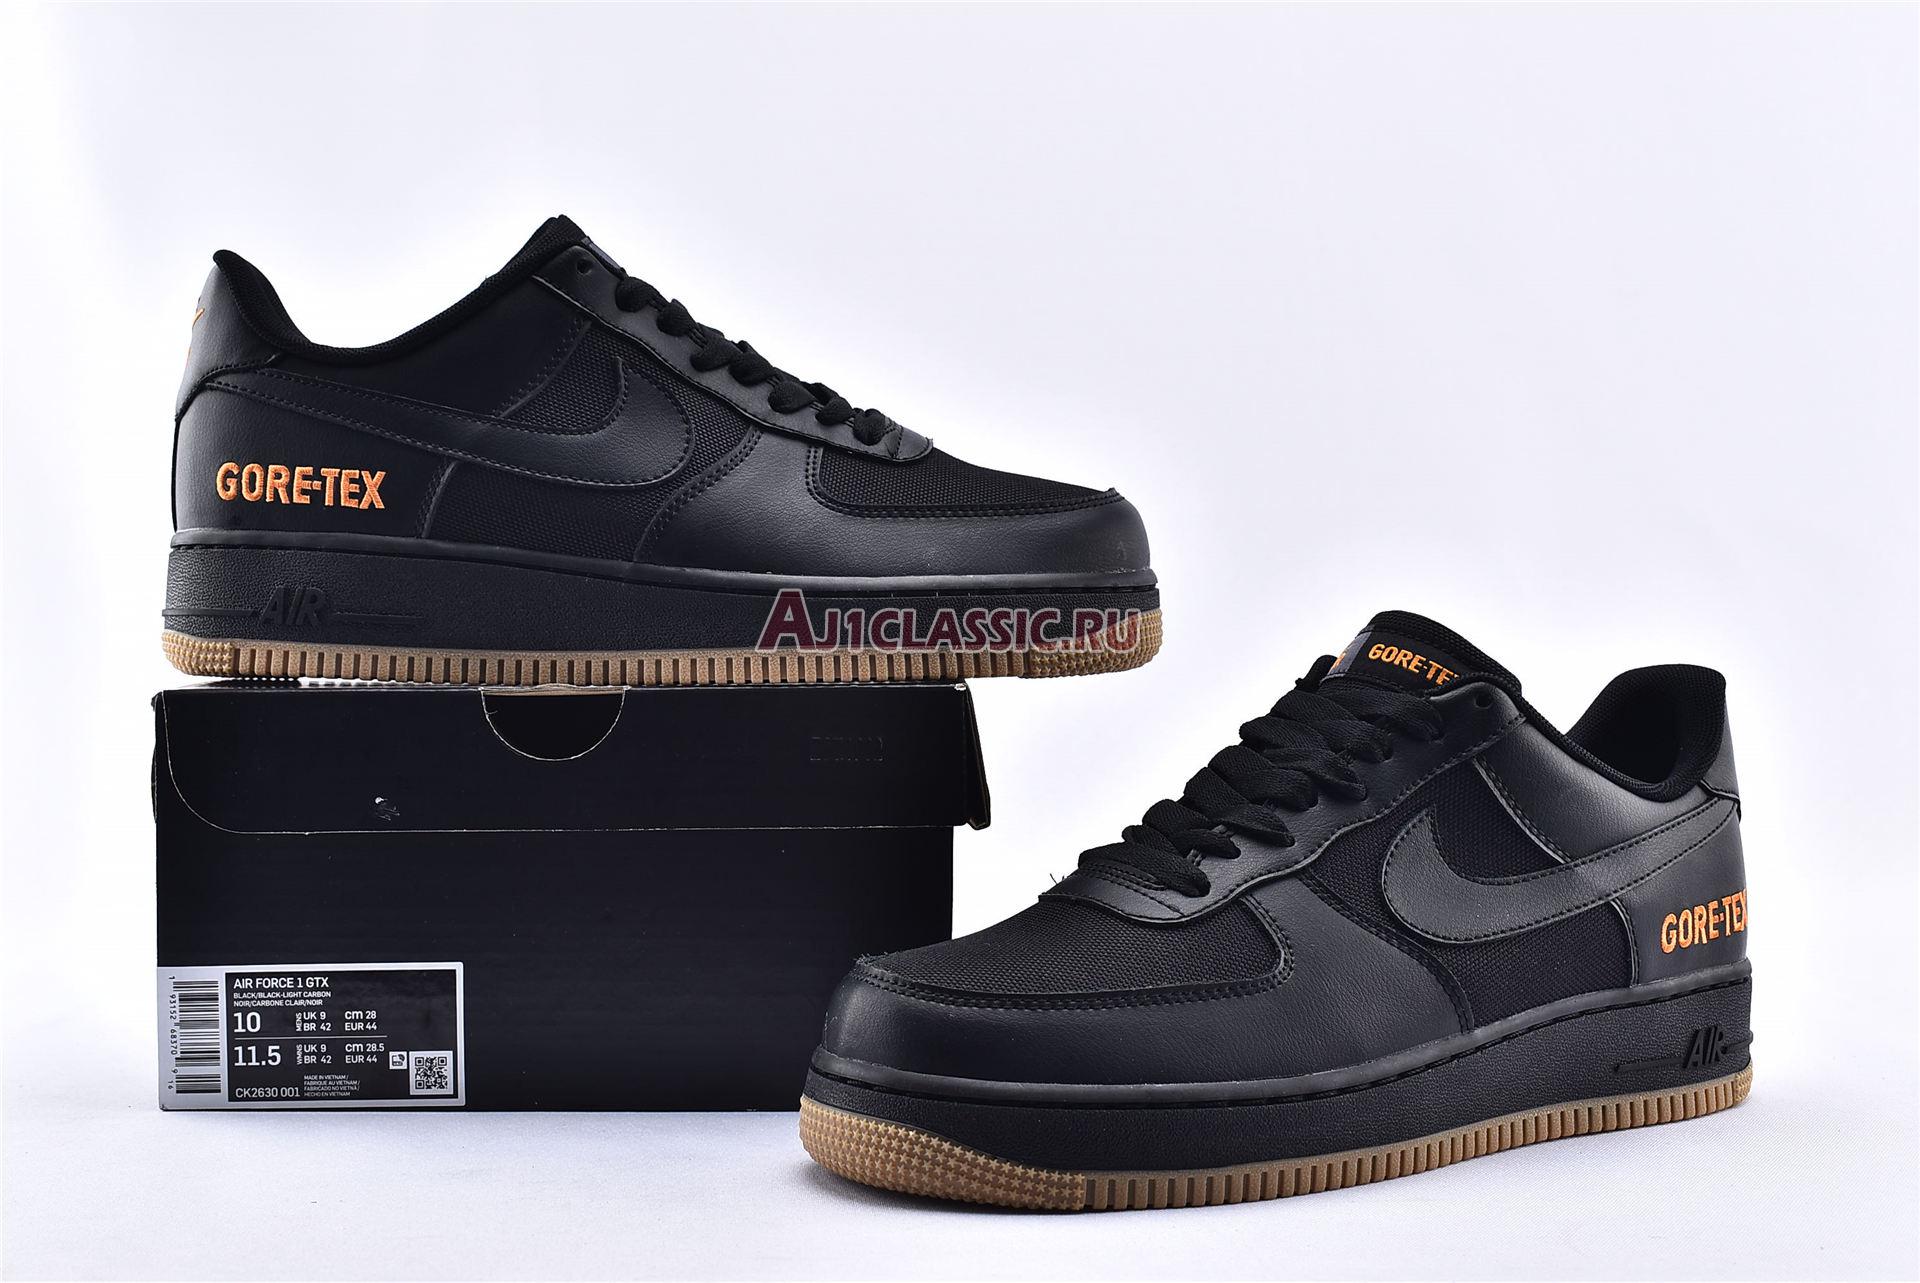 Nike Air Force 1 Low GTX Black CK2630-001 Black/Black/Light Carbon/Bright Ceramic Sneakers